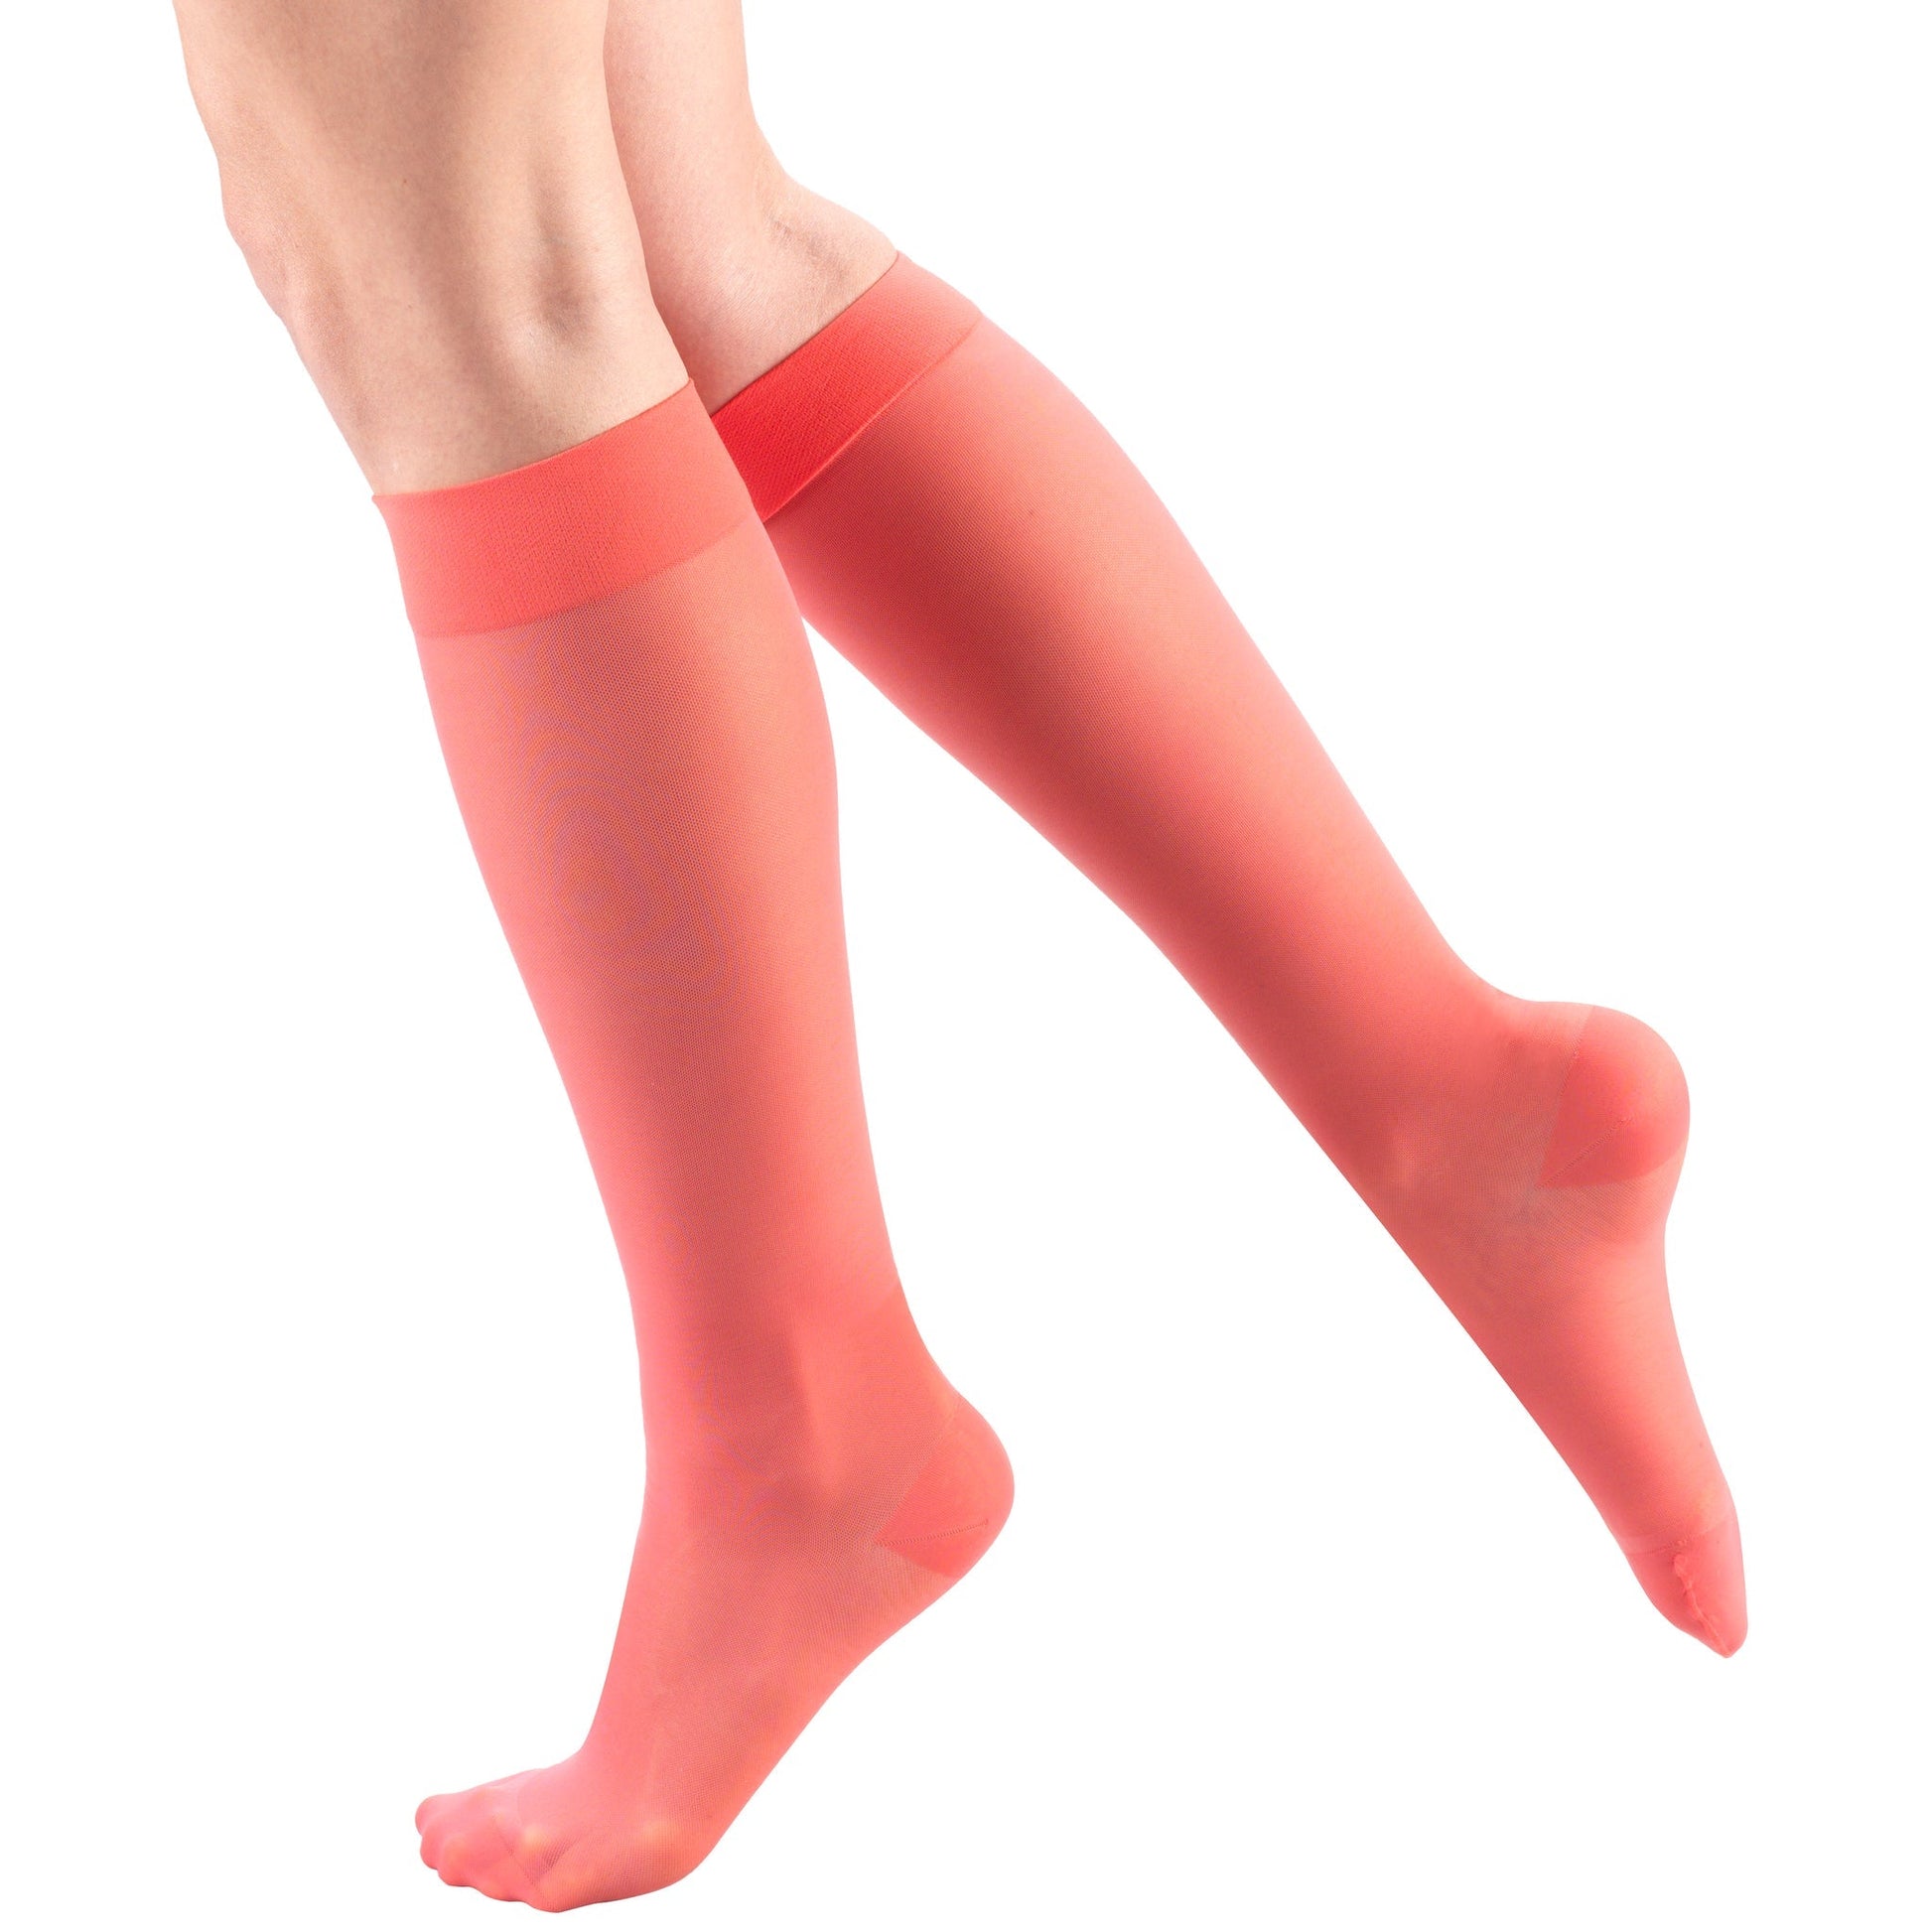 TRUFORM® Lites Women's Pantyhose 15-20 mmHg – Compression Store